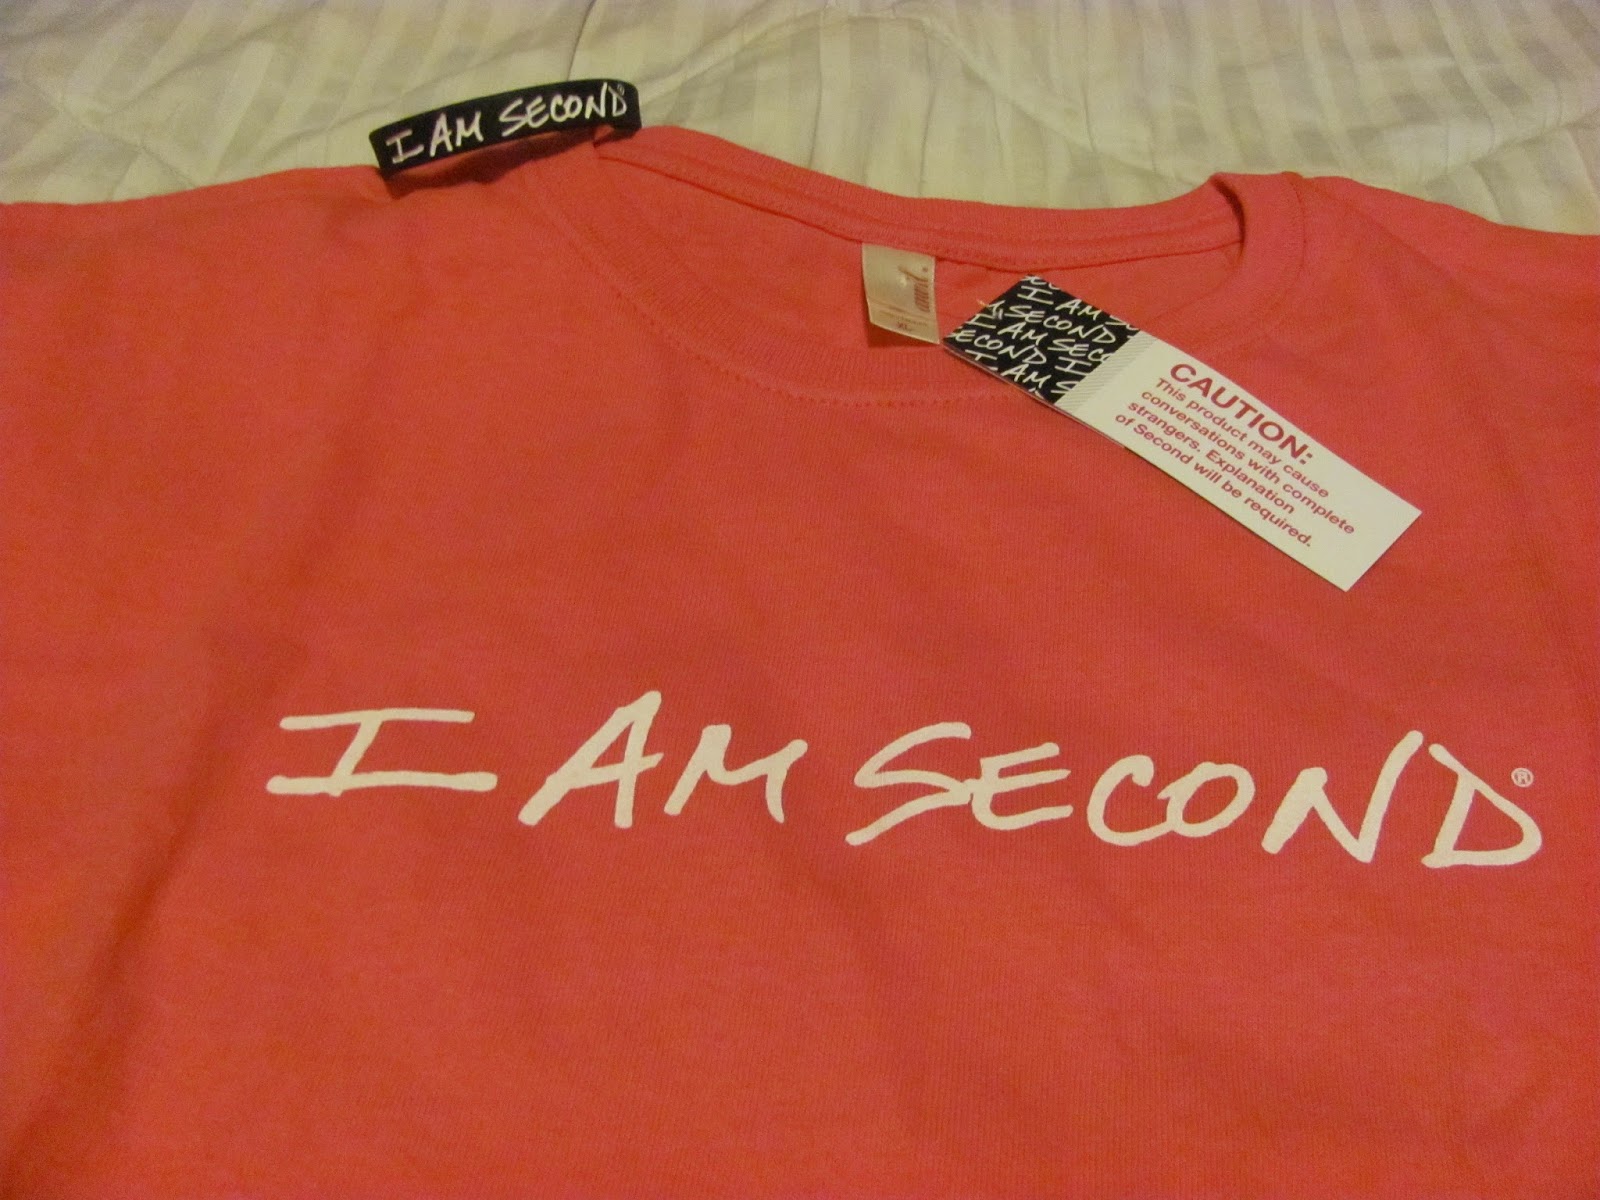 I am Second